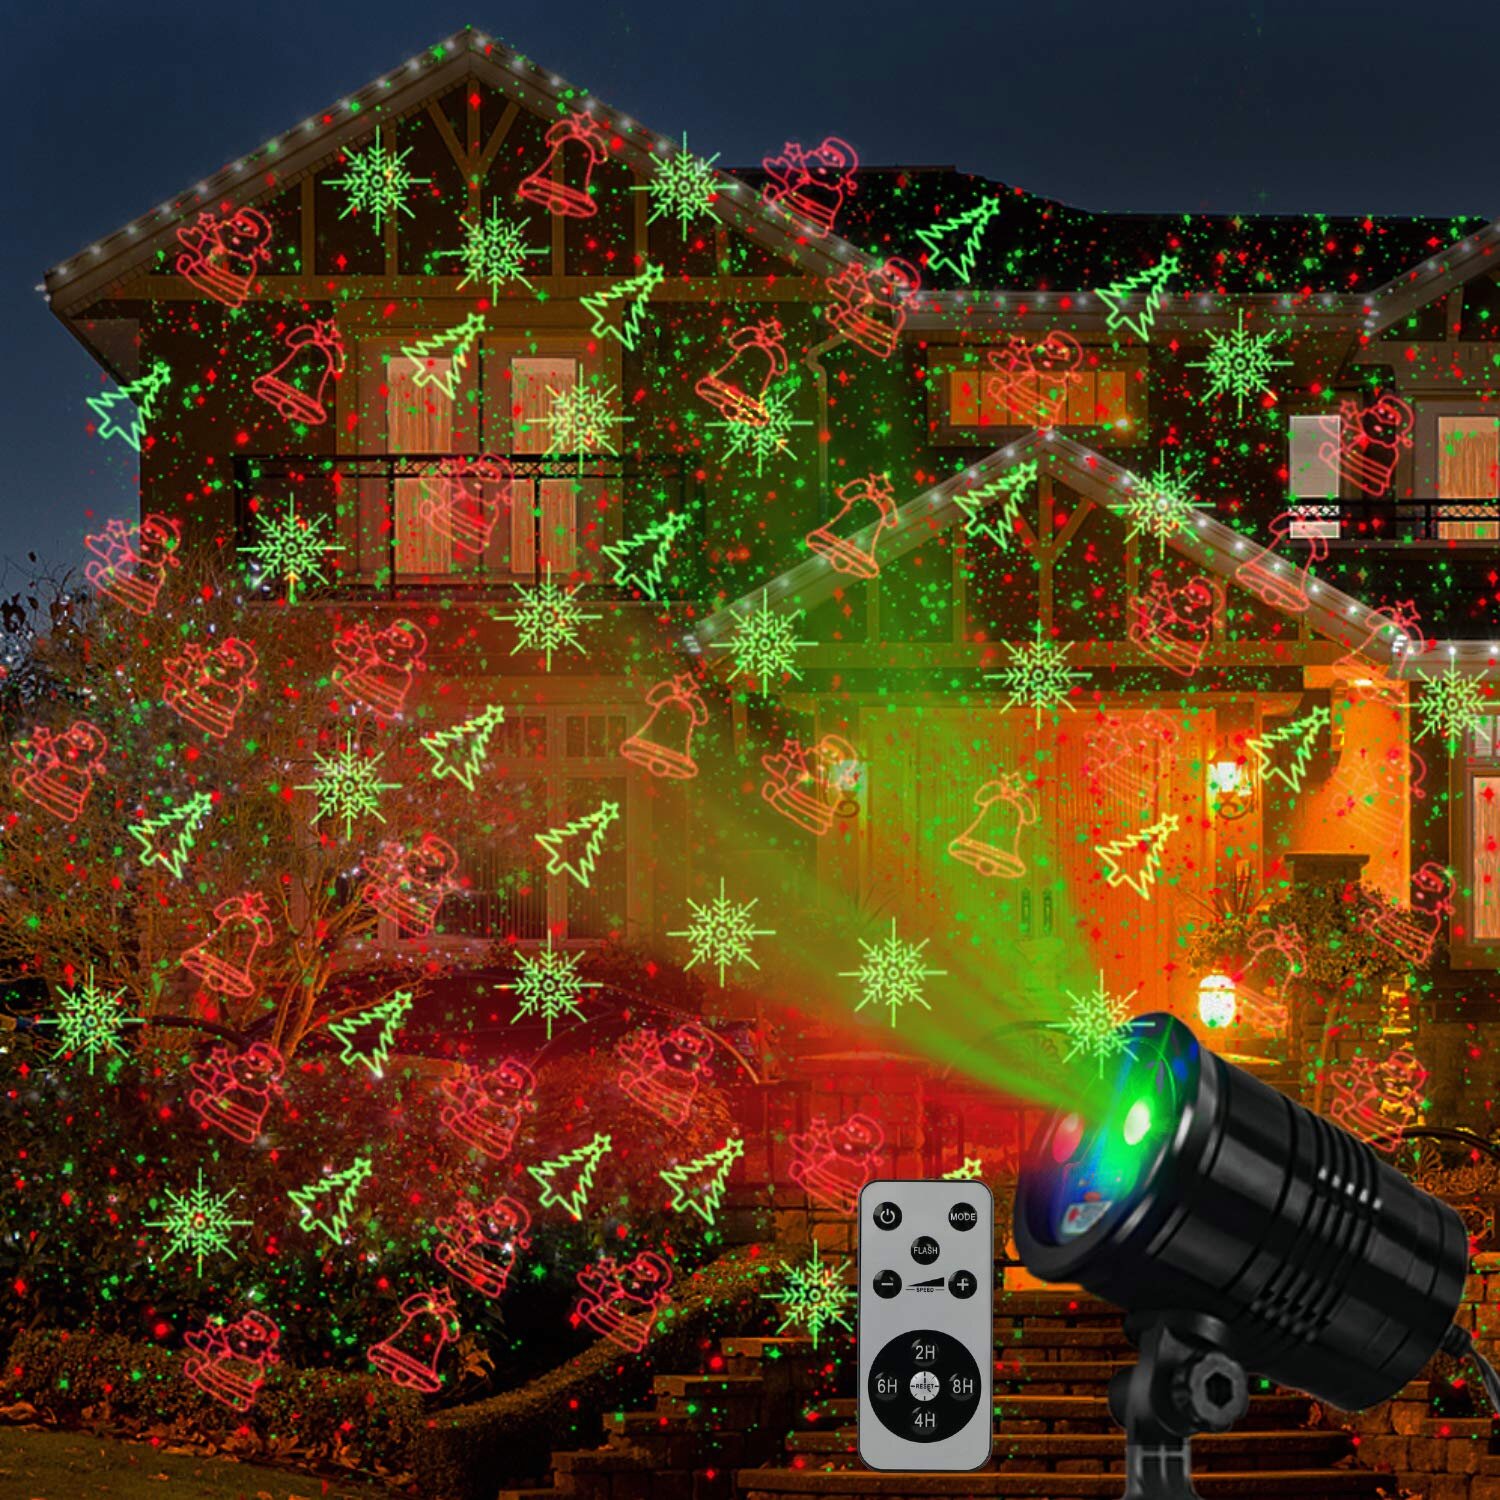 Fad Outdoor LED Snowflake Laser Light Projector Xmas Chrismas Lamp Decor Gift